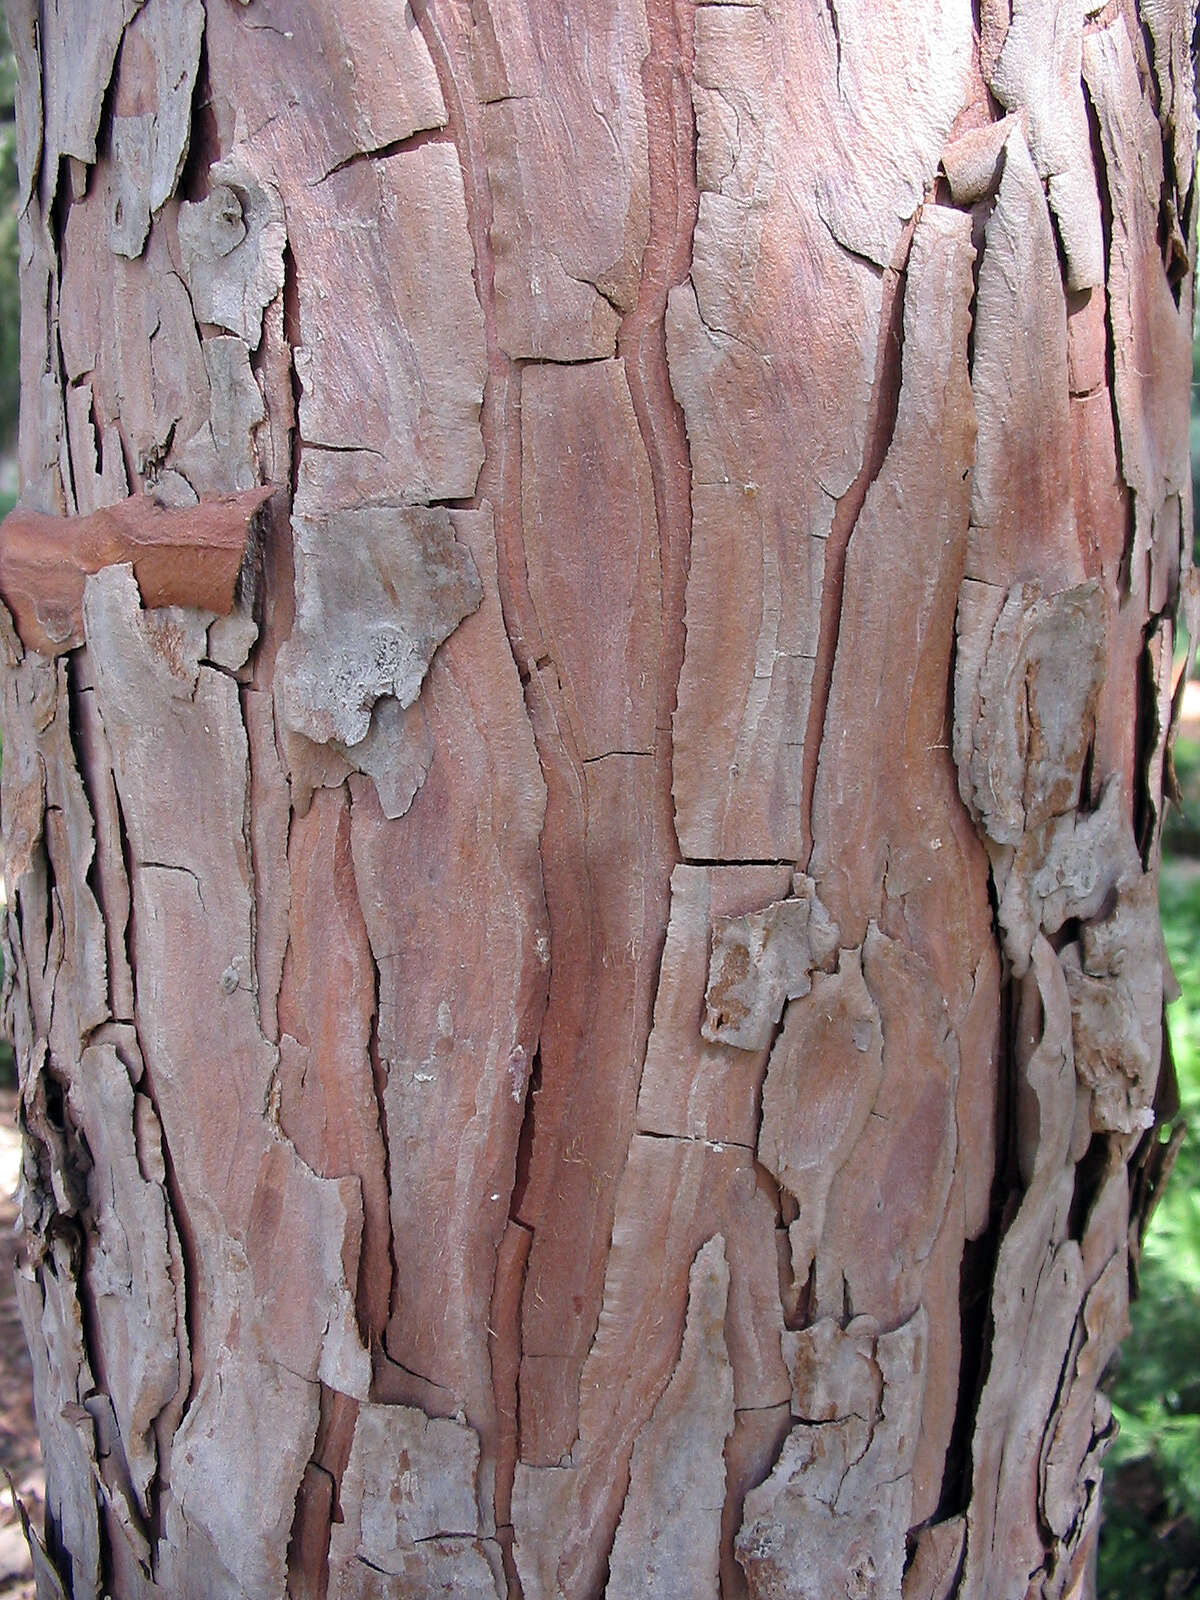 Image of Incense-cedar